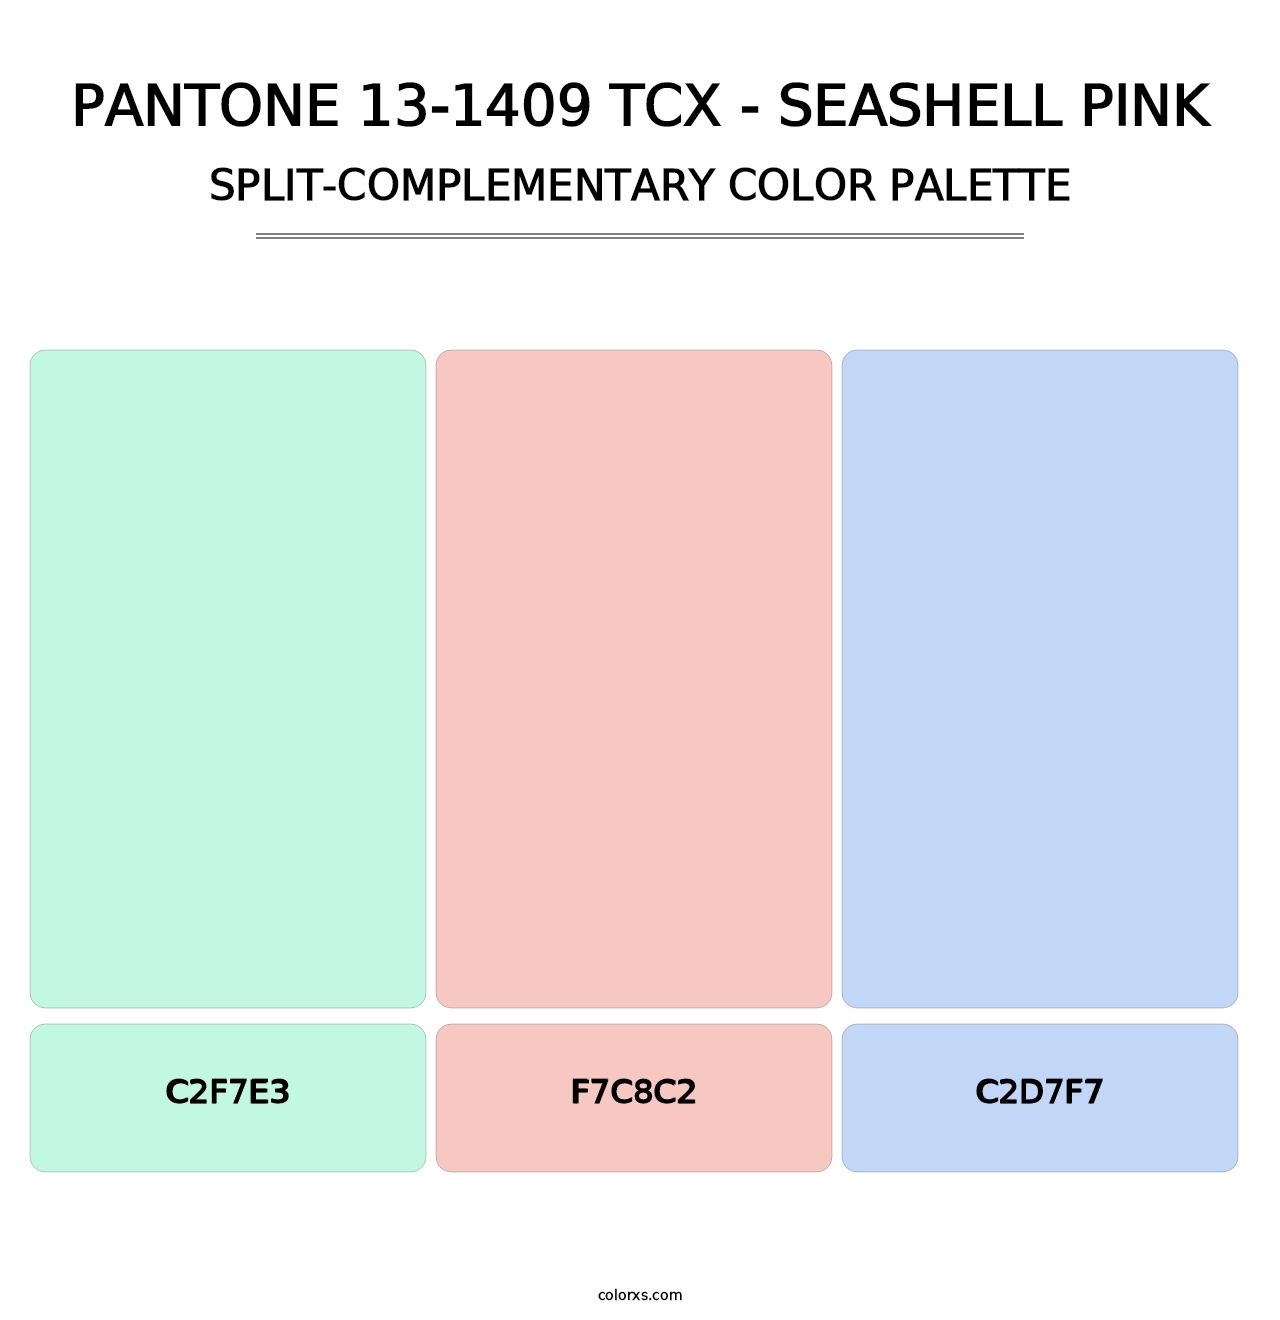 PANTONE 13-1409 TCX - Seashell Pink - Split-Complementary Color Palette